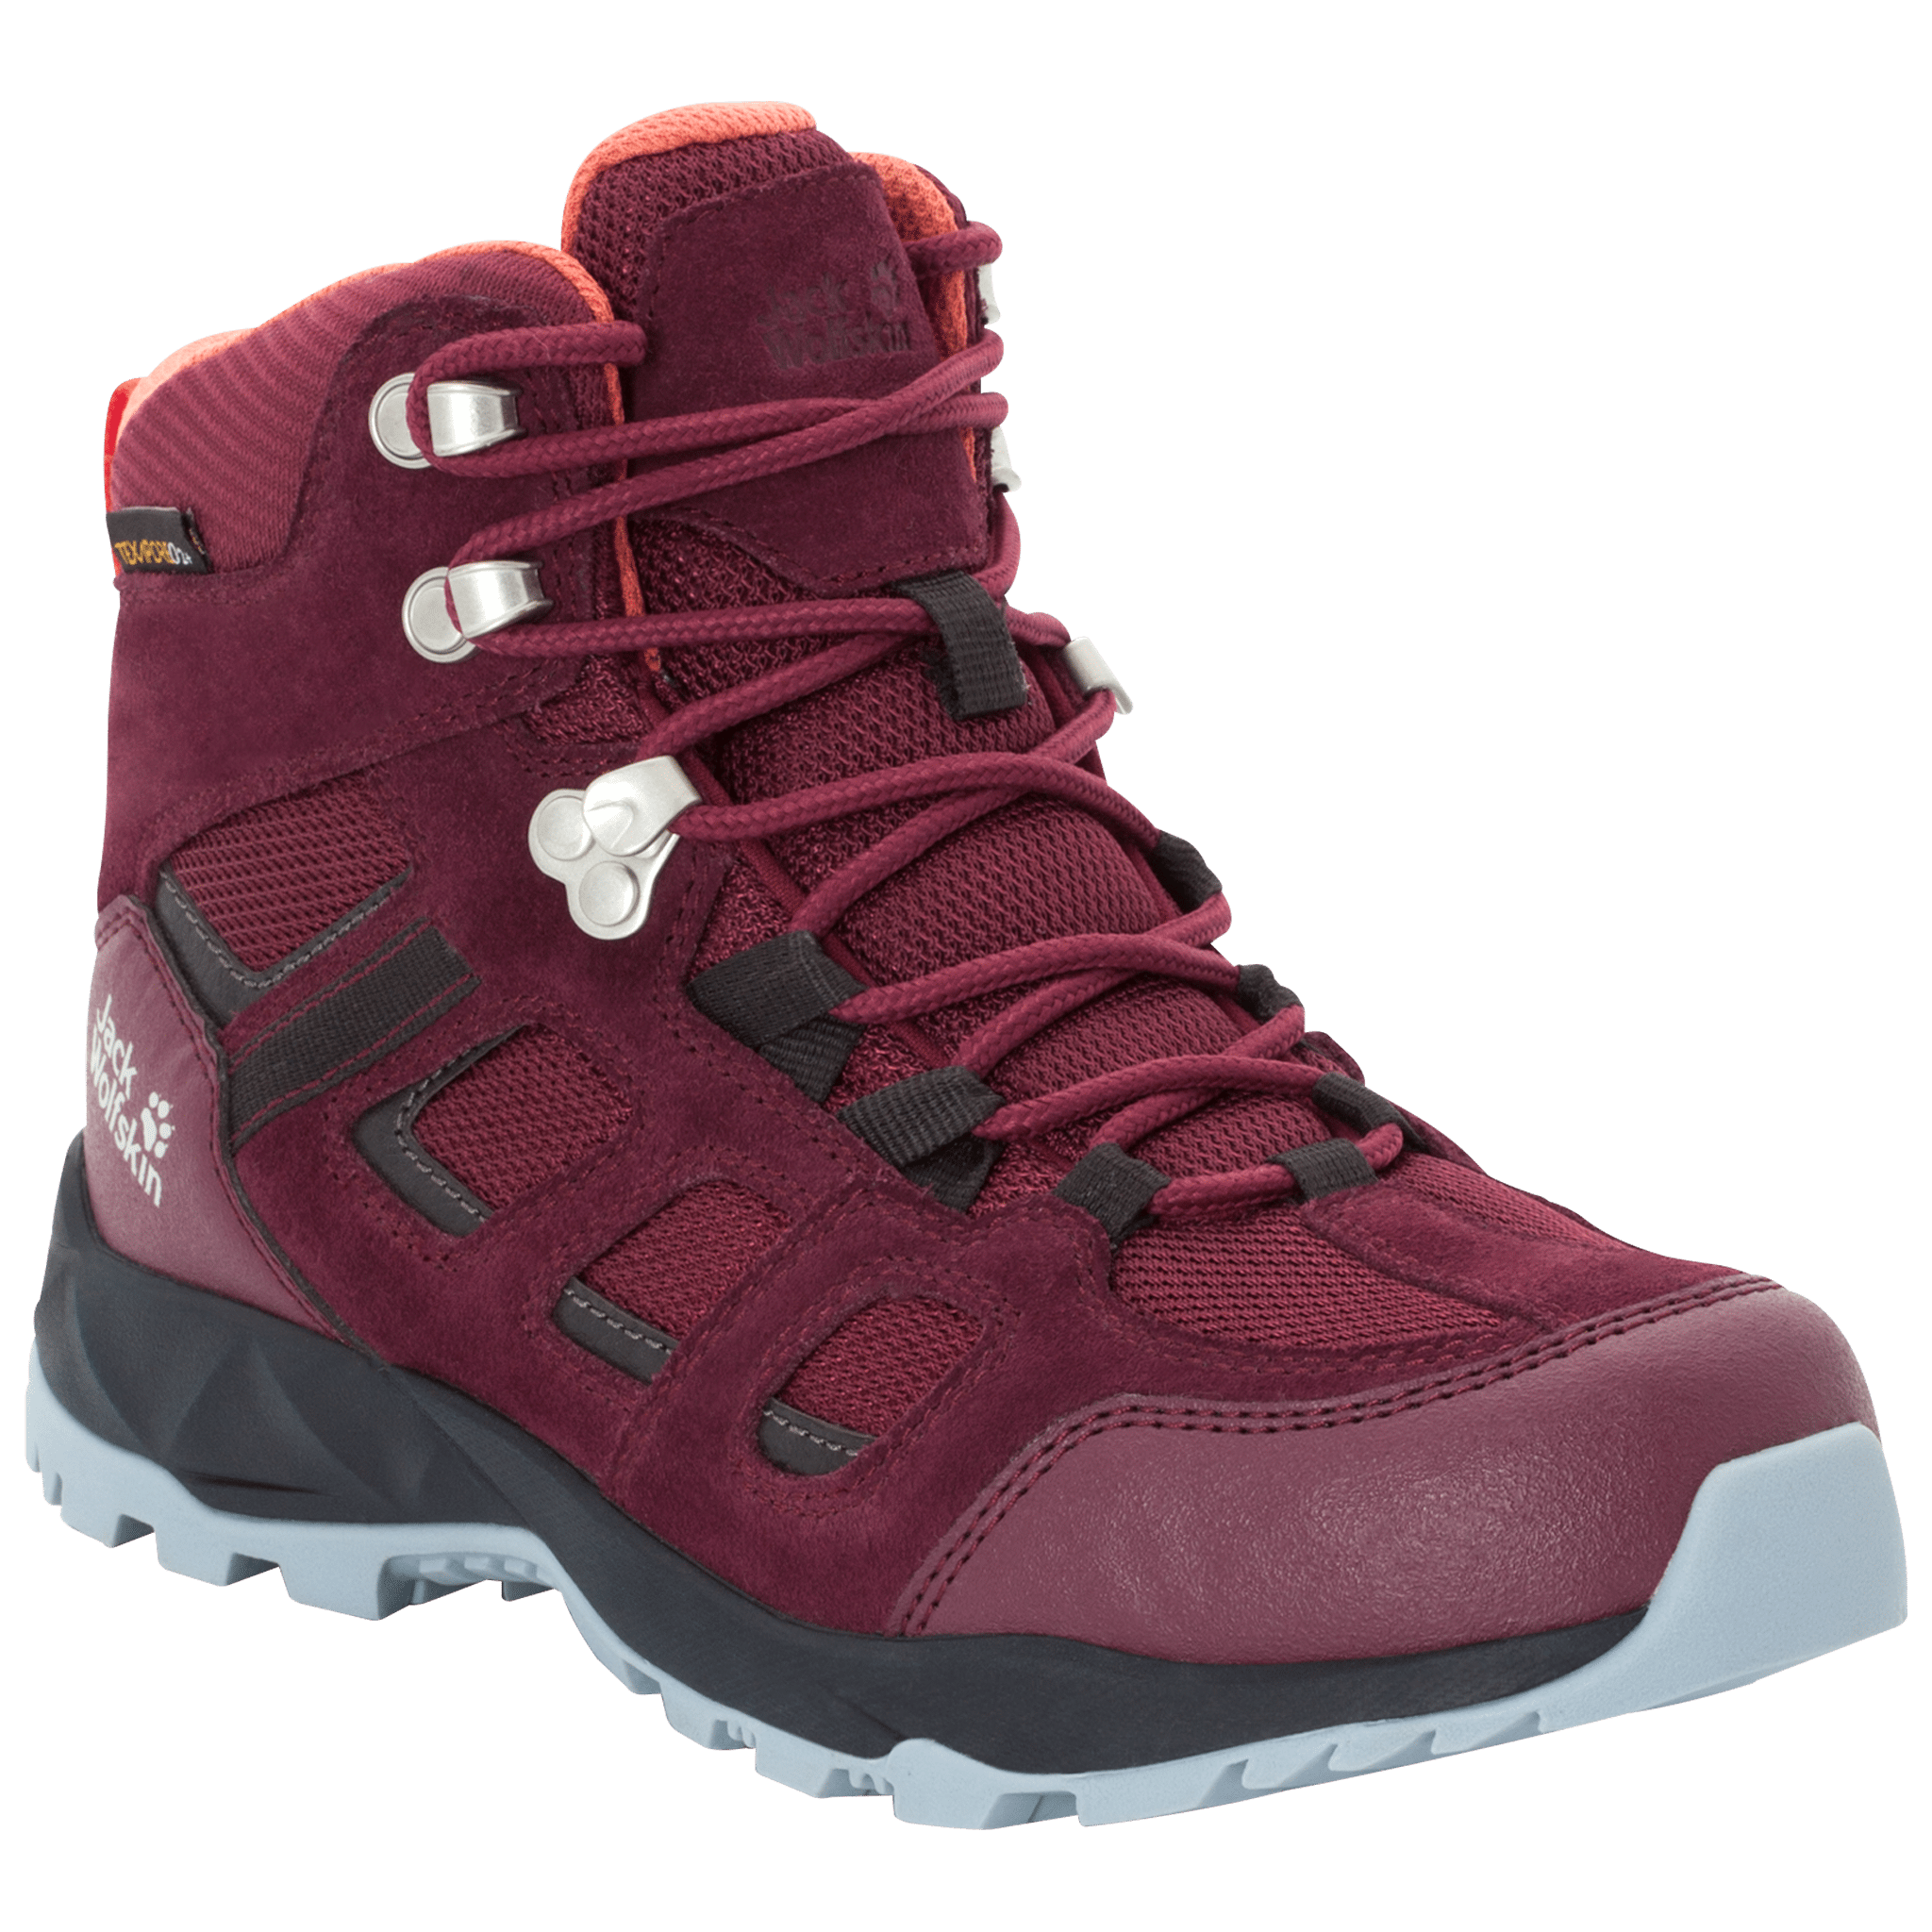 Burgundy / Phantom Waterproof Hiking Shoes Women